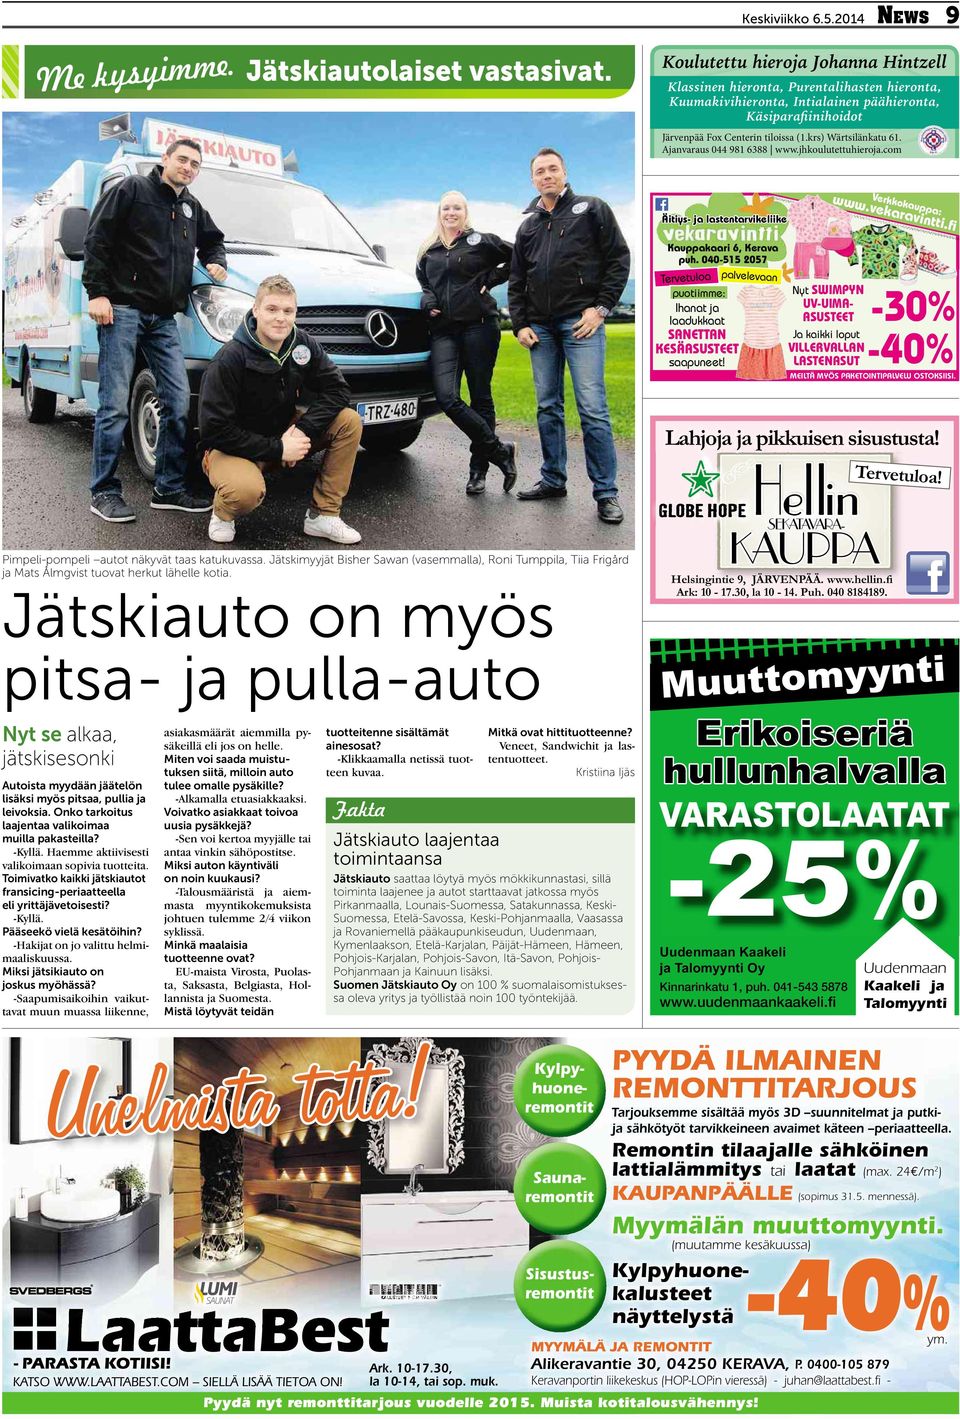 Ajanvaraus 044 981 6388 www.jhkoulutettuhieroja.com Äitiys- jalastentarvikeliike www.vekaravintti.fi Verkkokauppa: Kauppakaari 6, Kerava puh.